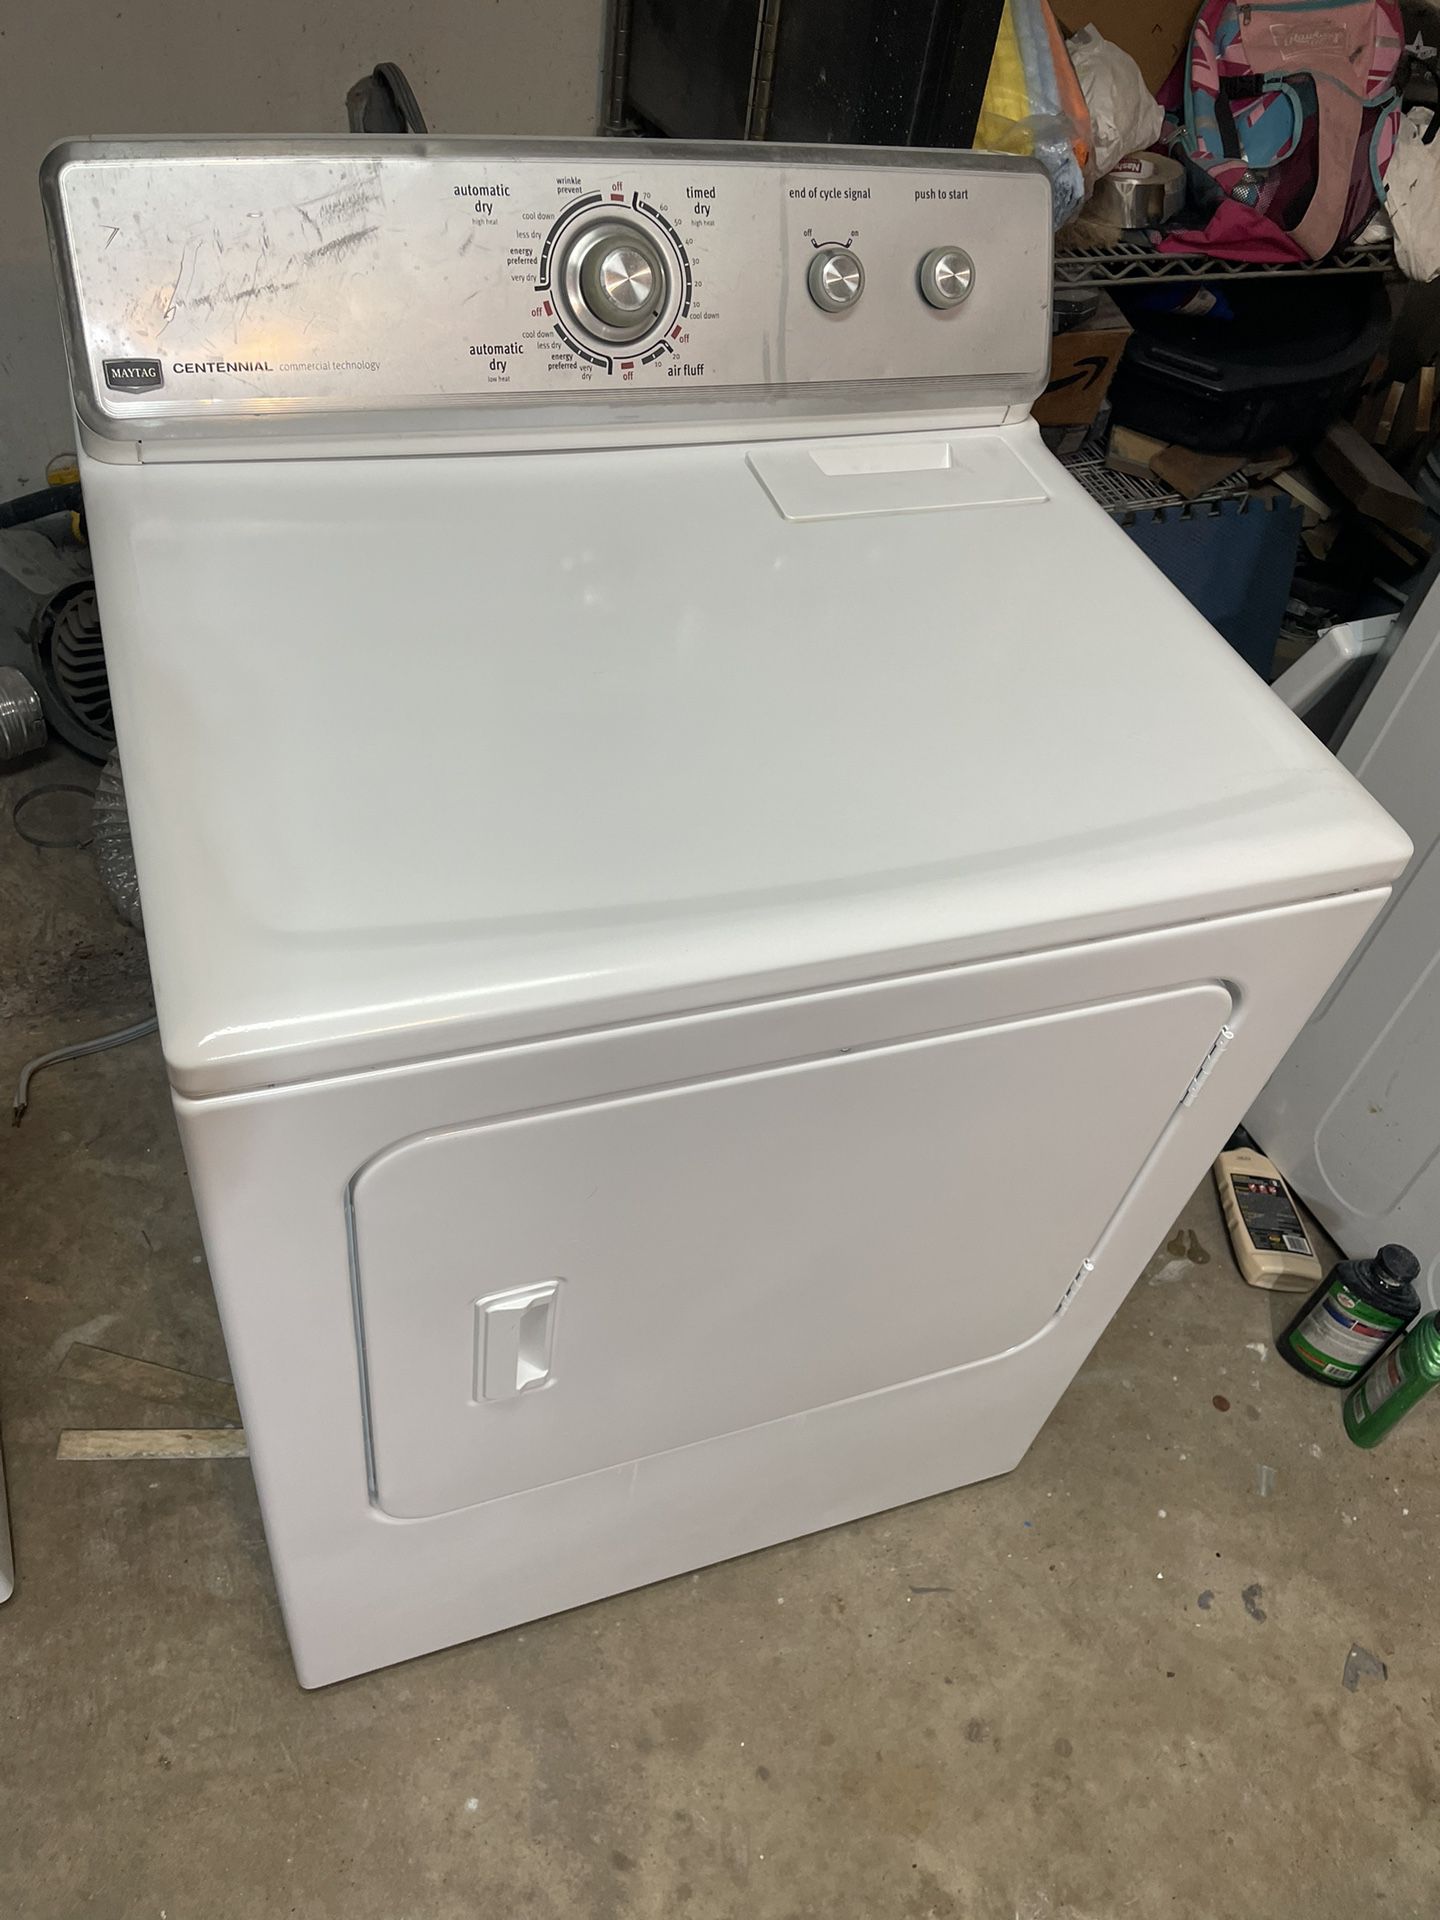 Maytag Electric Dryer With Warranty 